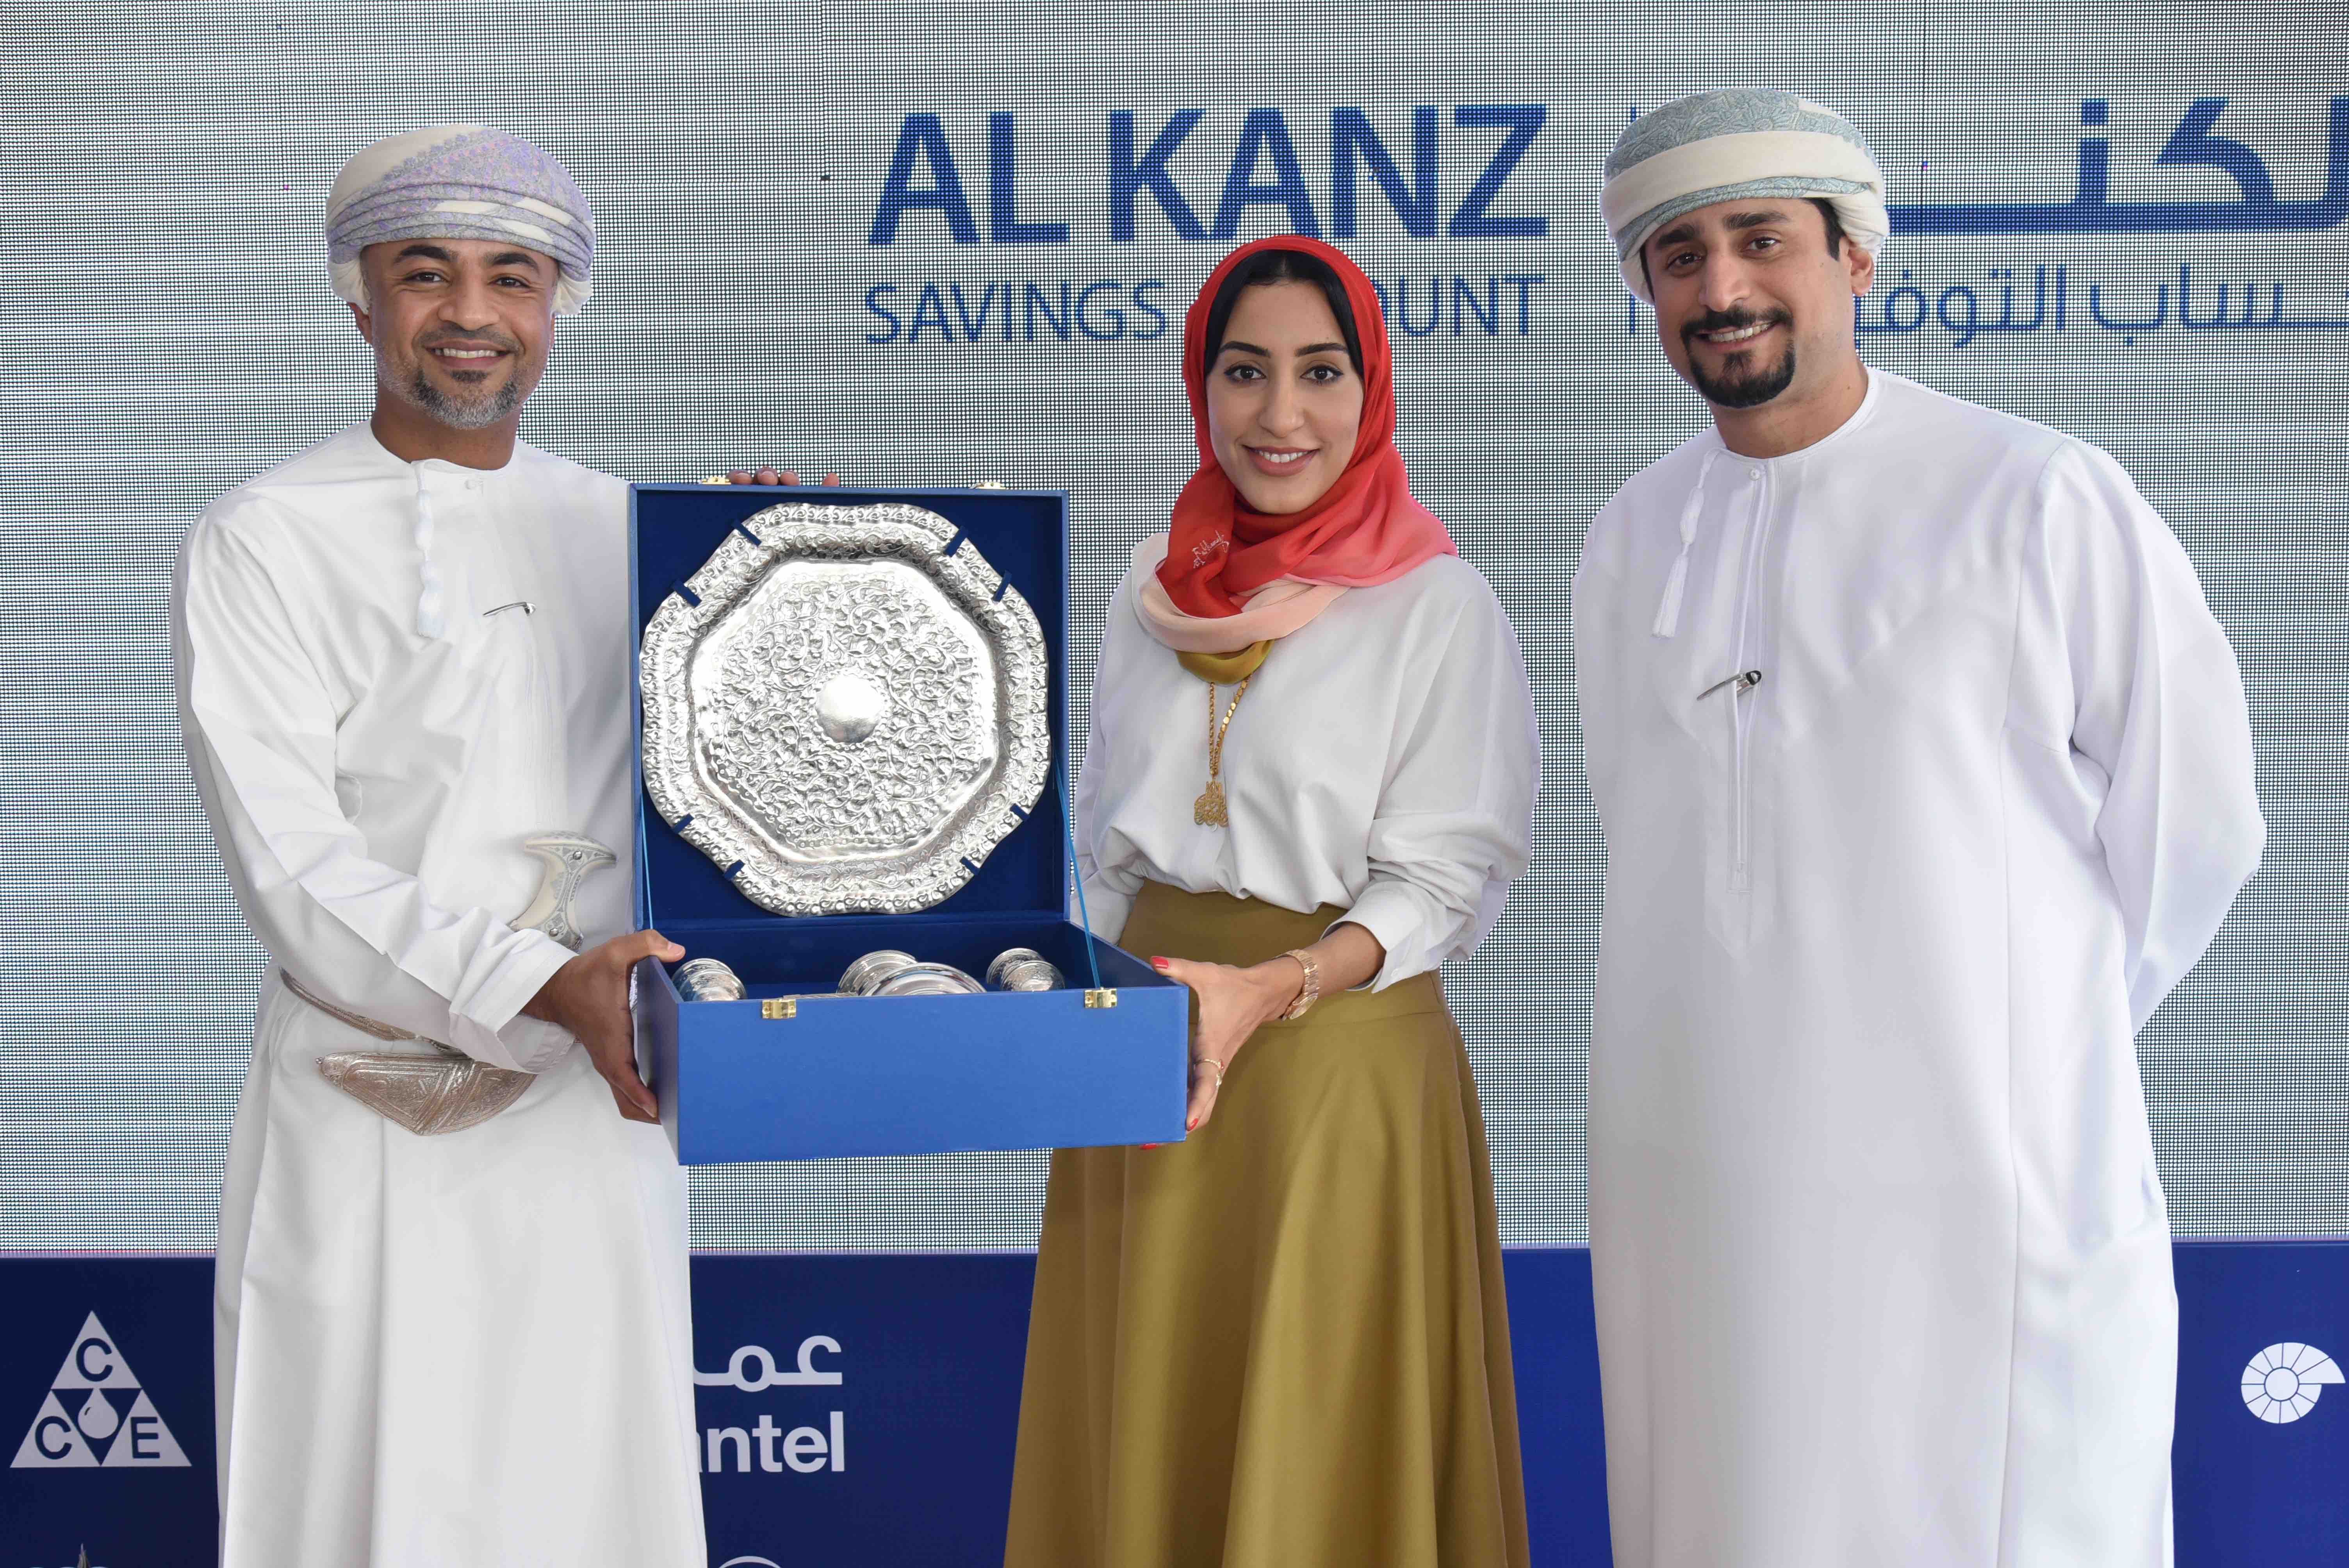 NBO' rewards four Al Kanz  winners with OMR25,000 each